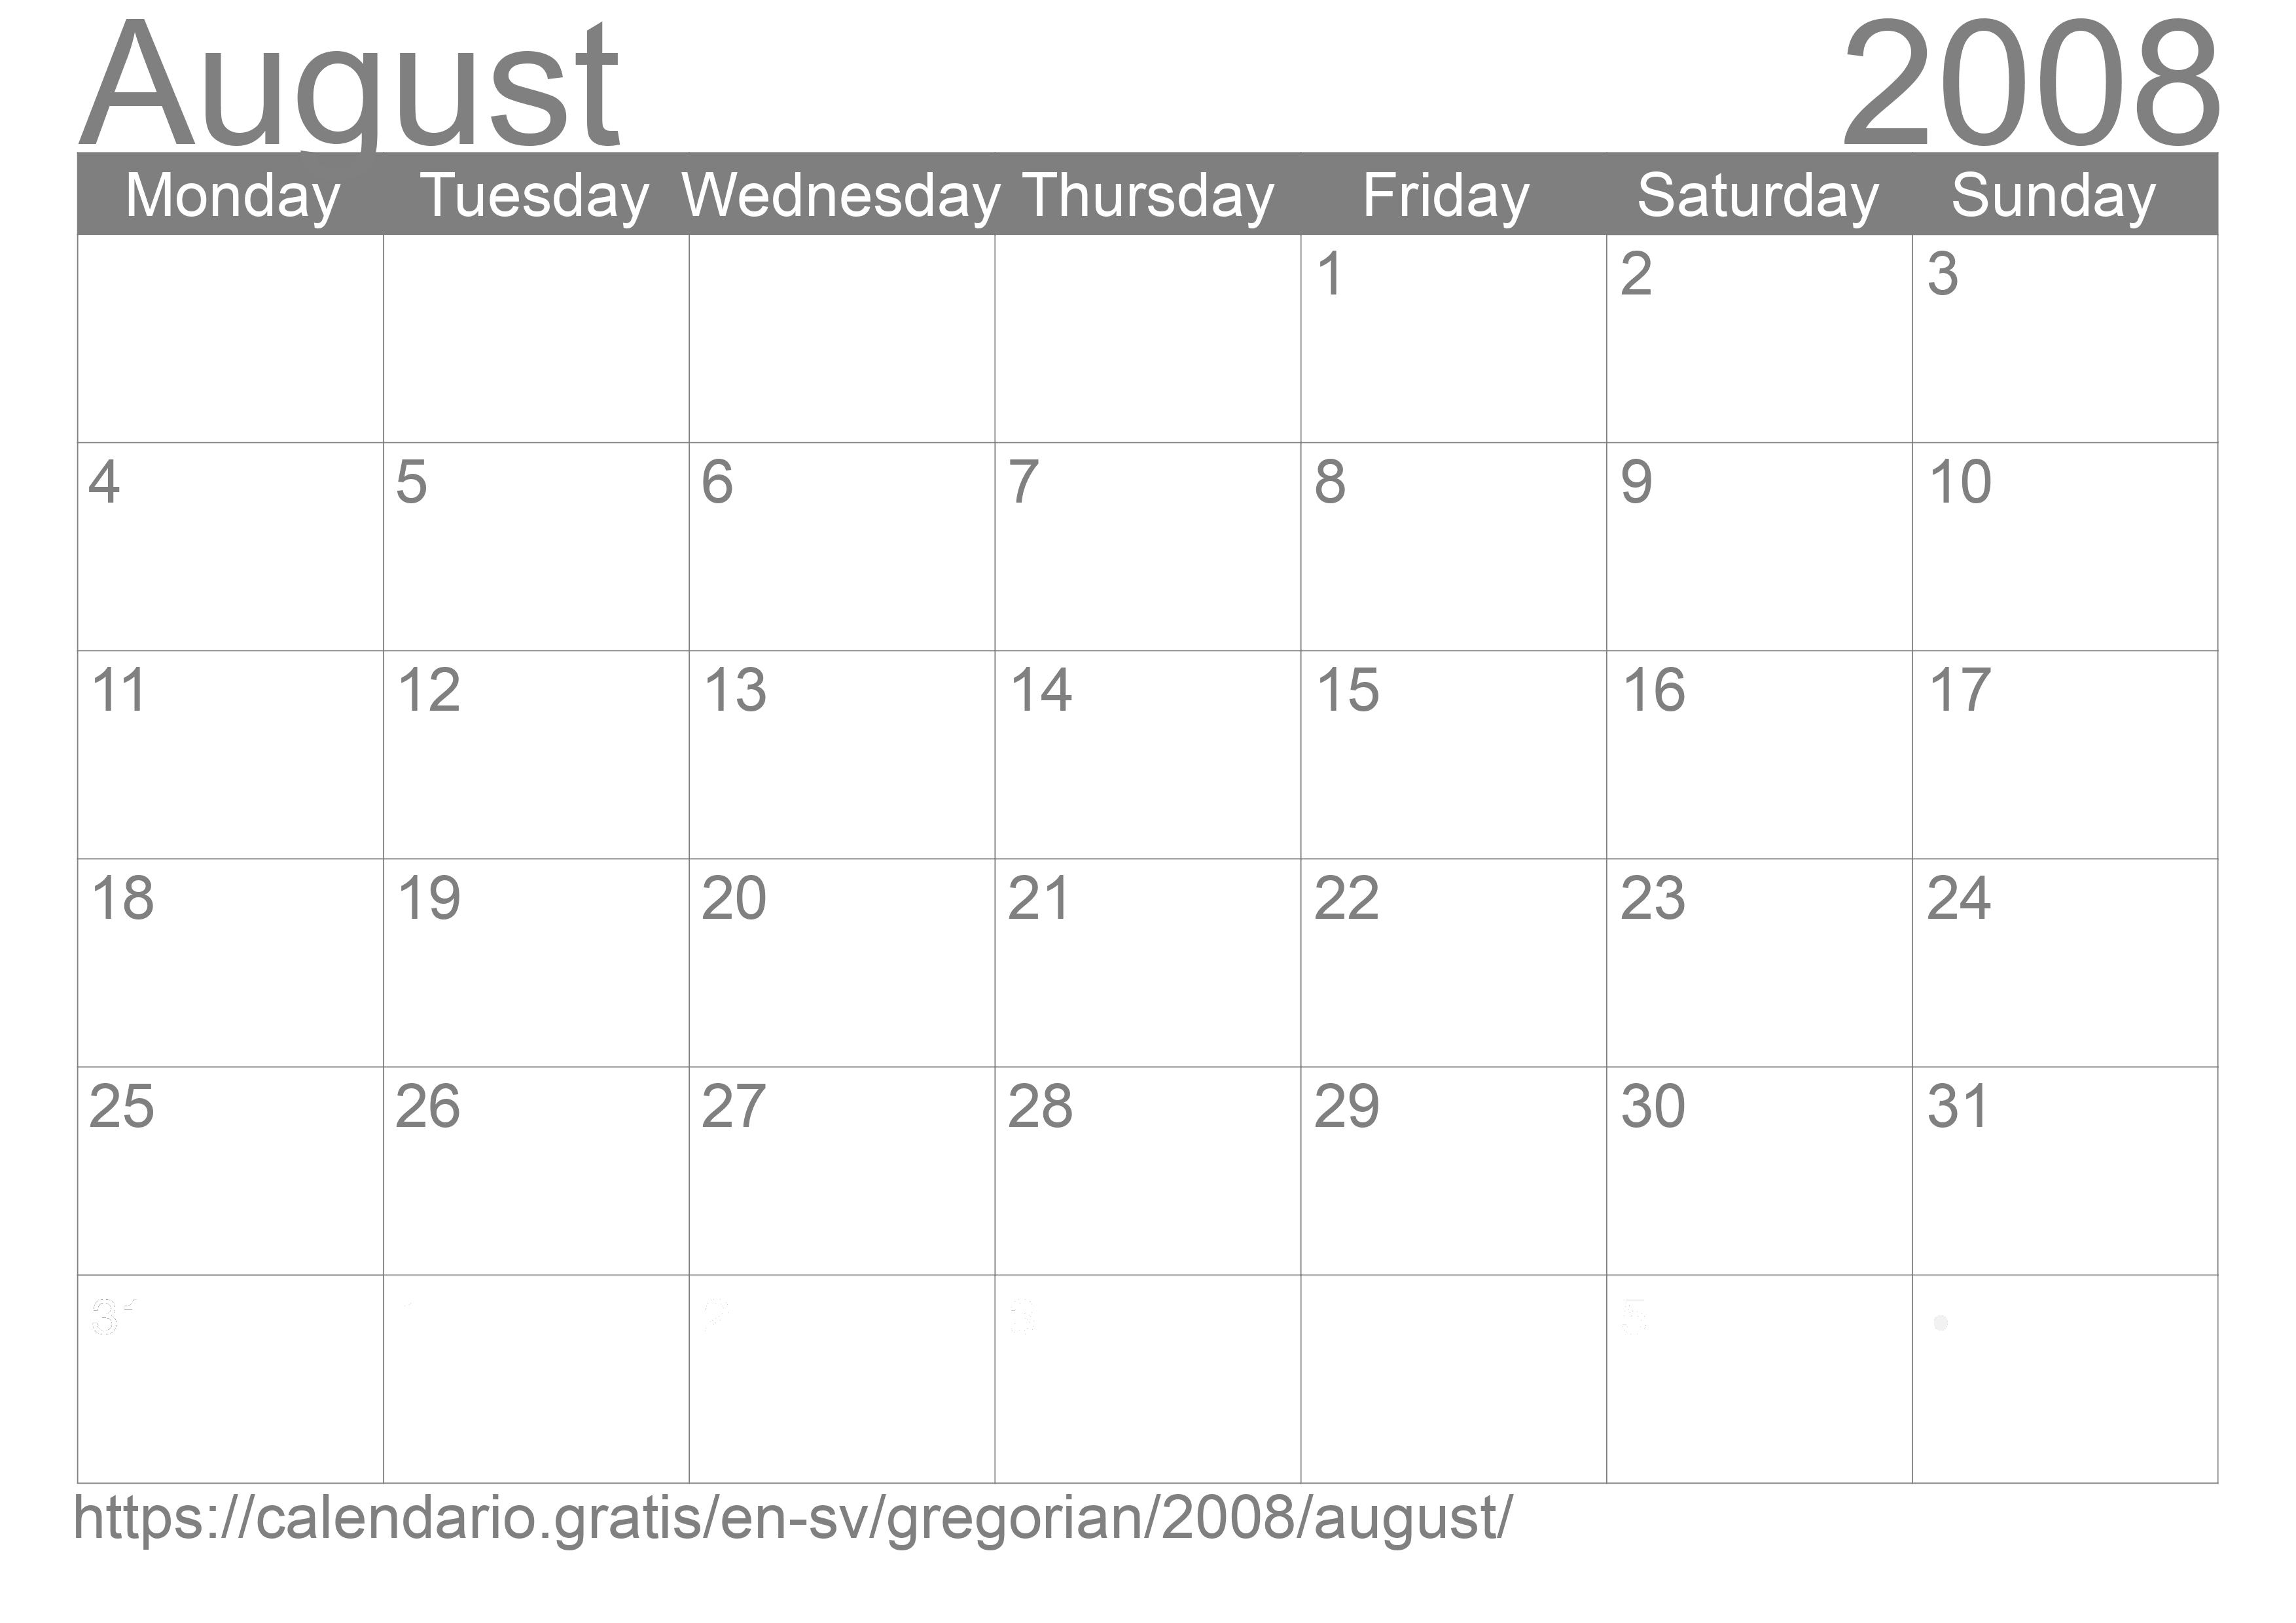 Calendar August 2008 to print